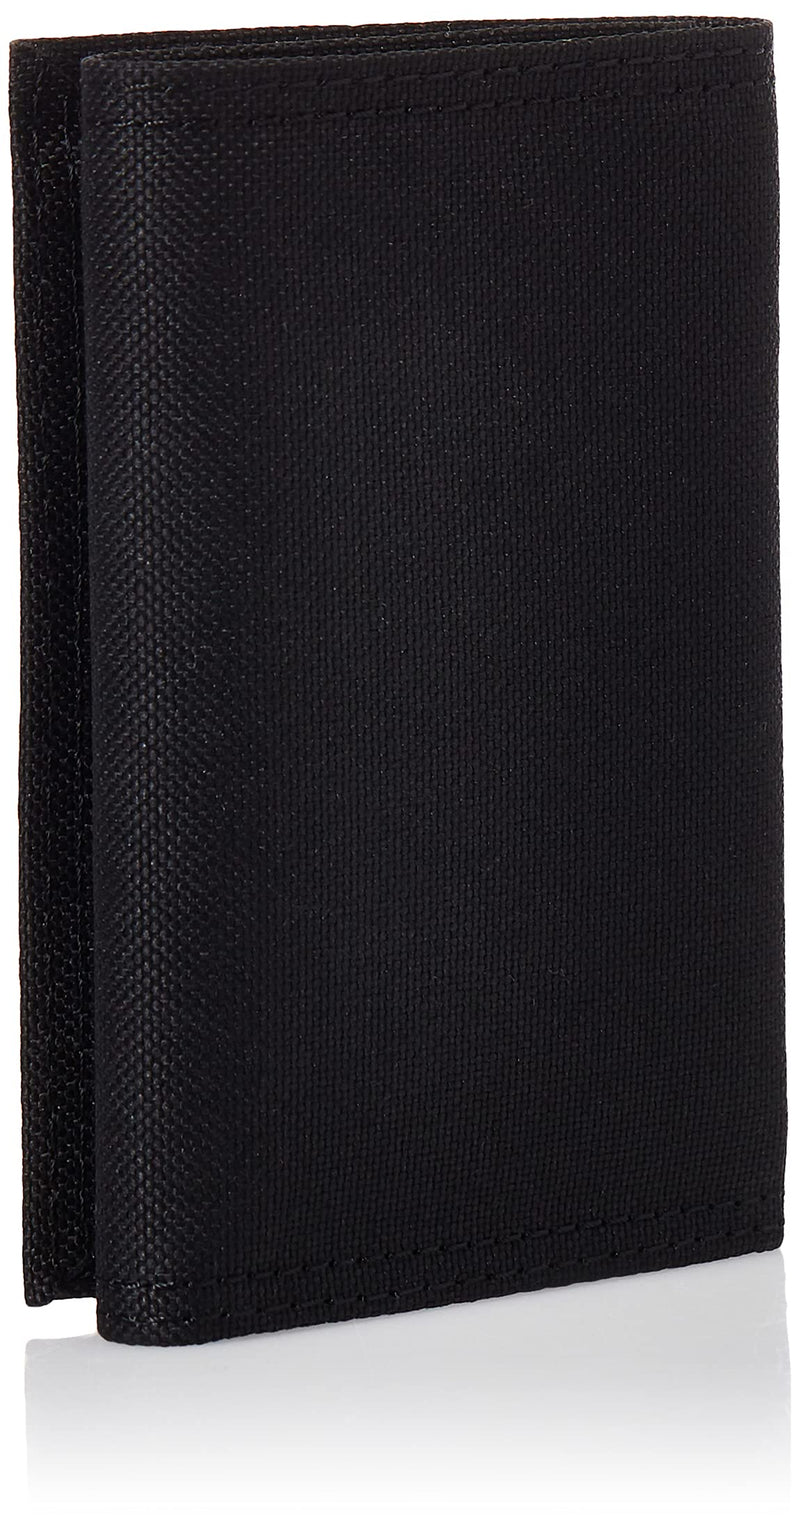 [Australia] - Timberland Men’s Trifold Nylon Wallet One Size Black 